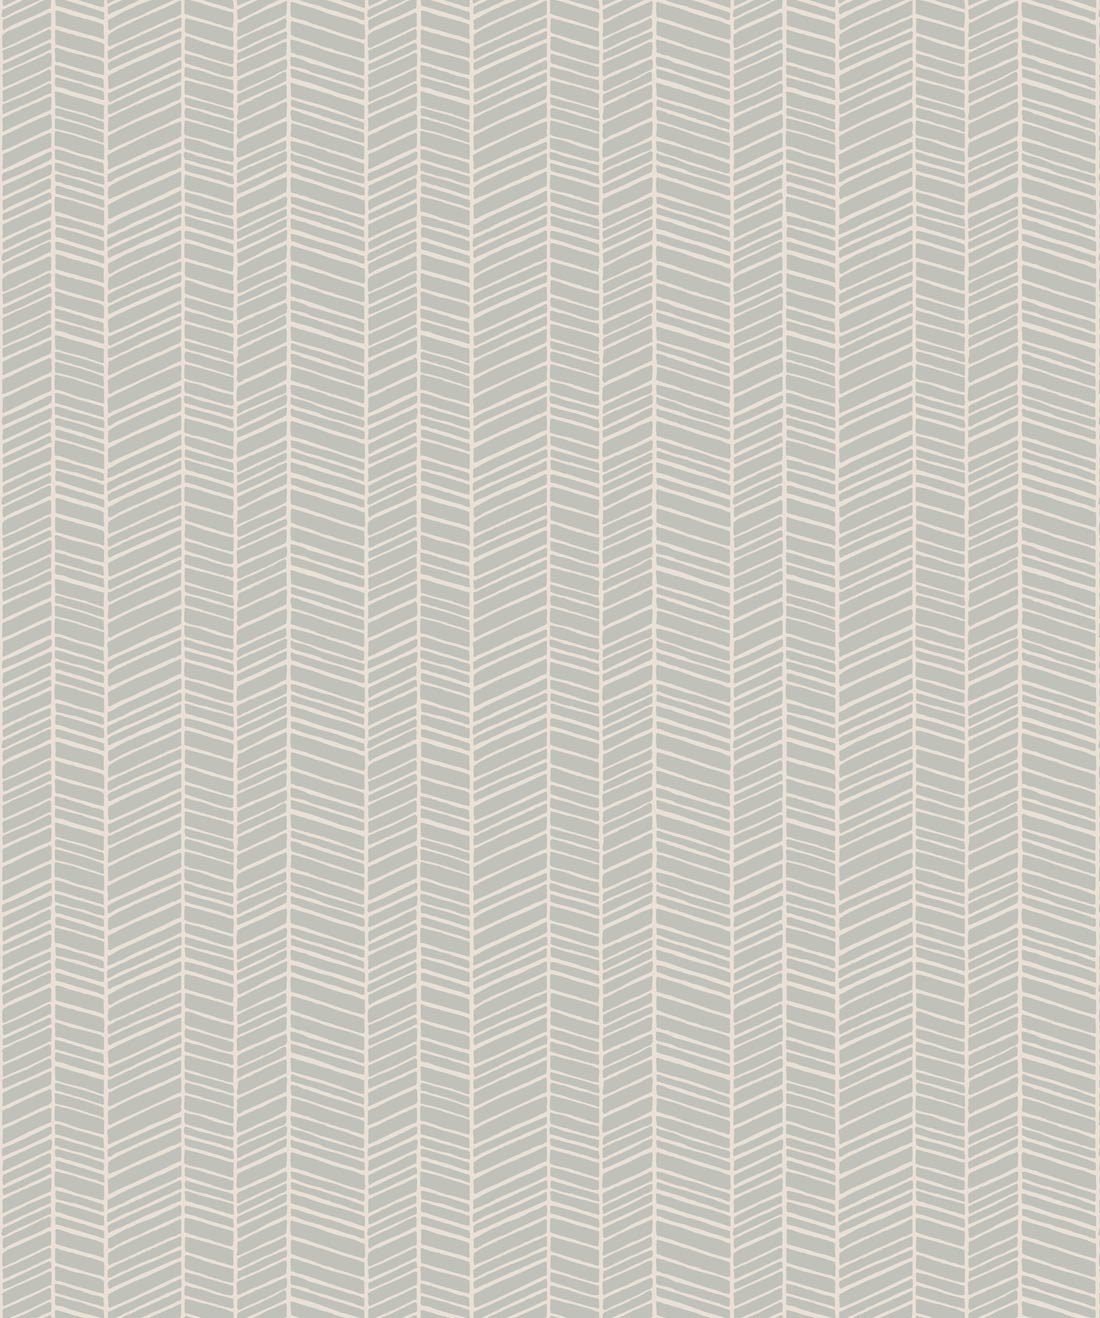 Herringbone Wallpaper • Exclsuive Designer Decor